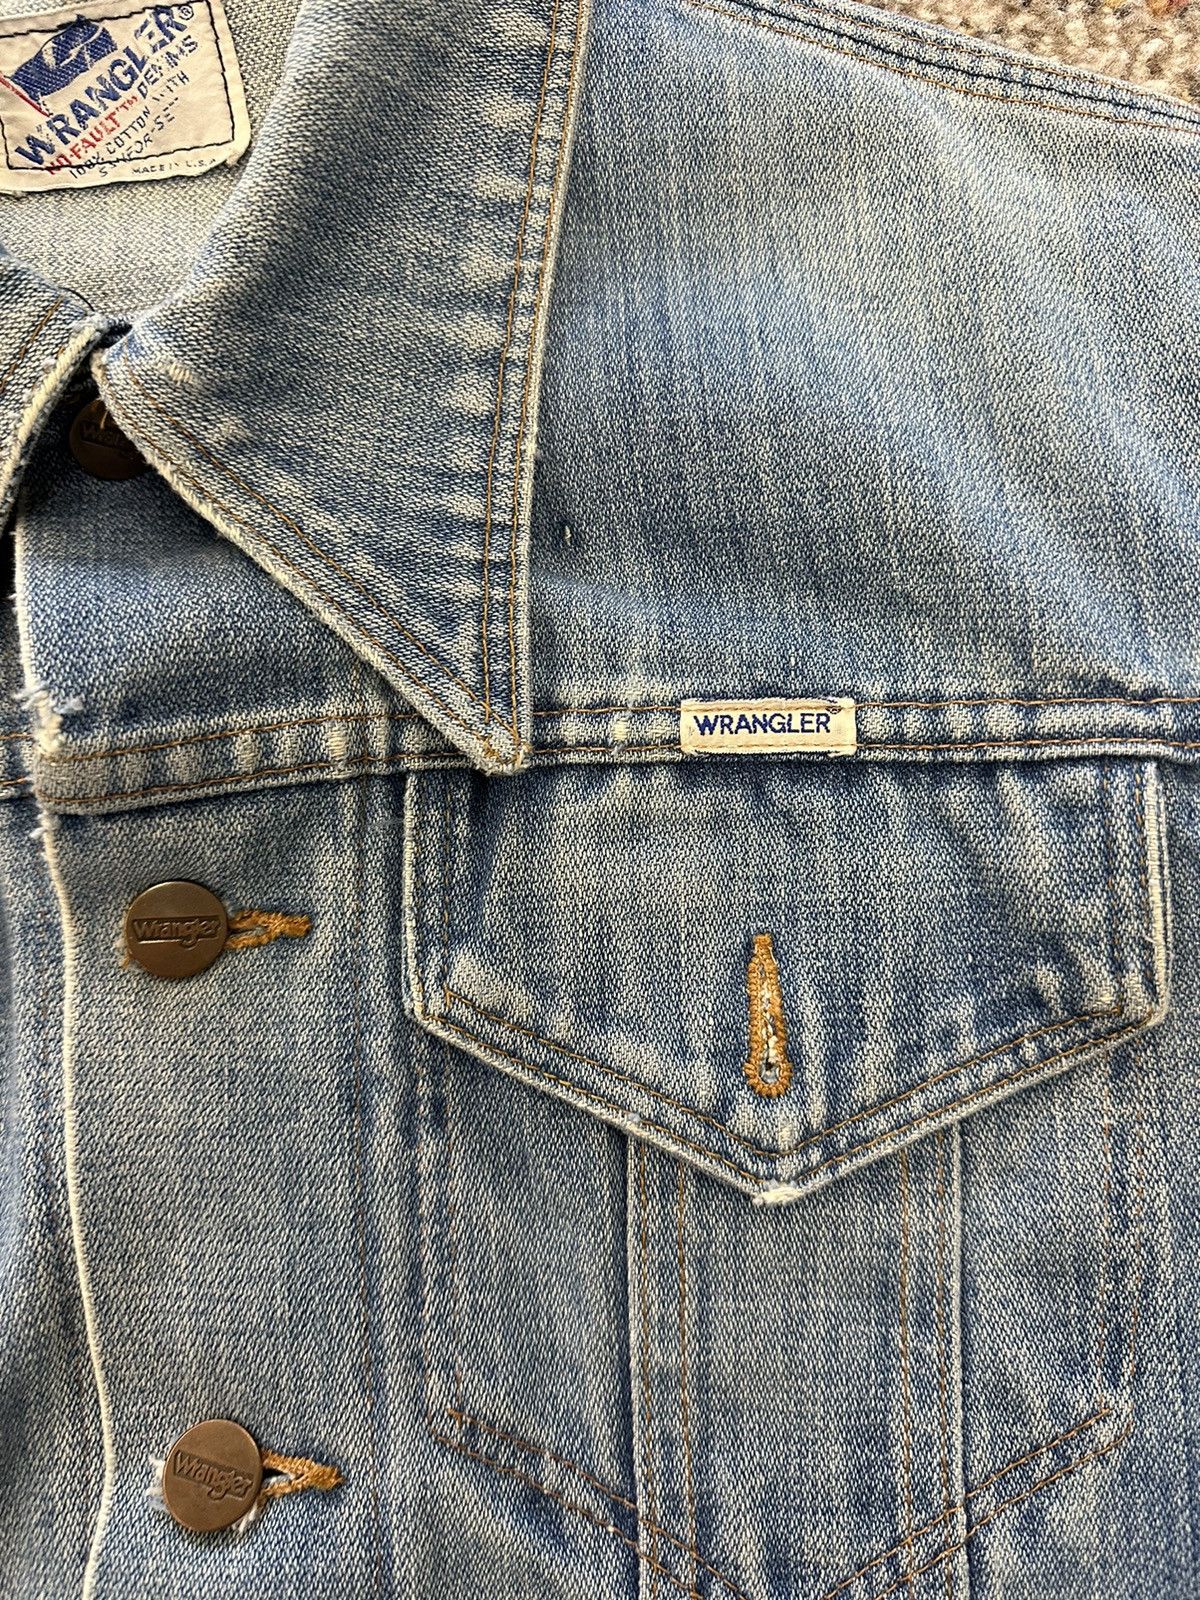 Vintage Vintage 1970s Wrangler Light Wash Denim Jacket Small Size US S / EU 44-46 / 1 - 4 Thumbnail